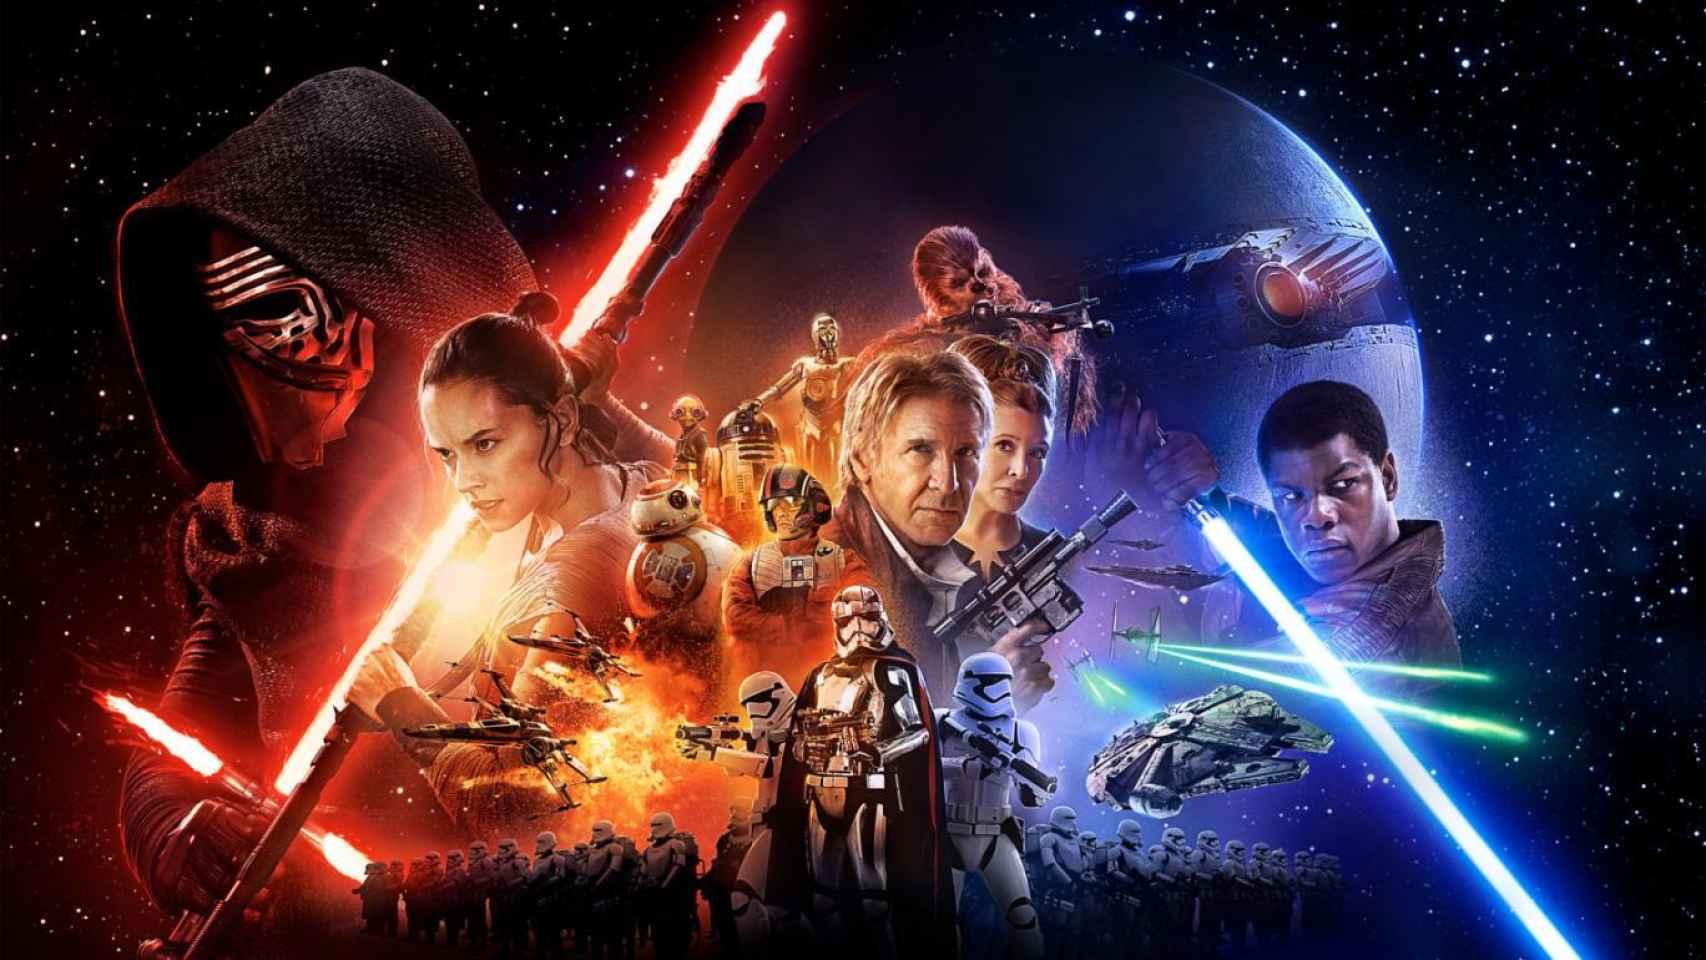 Star Wars el despertar de la fuerza poster